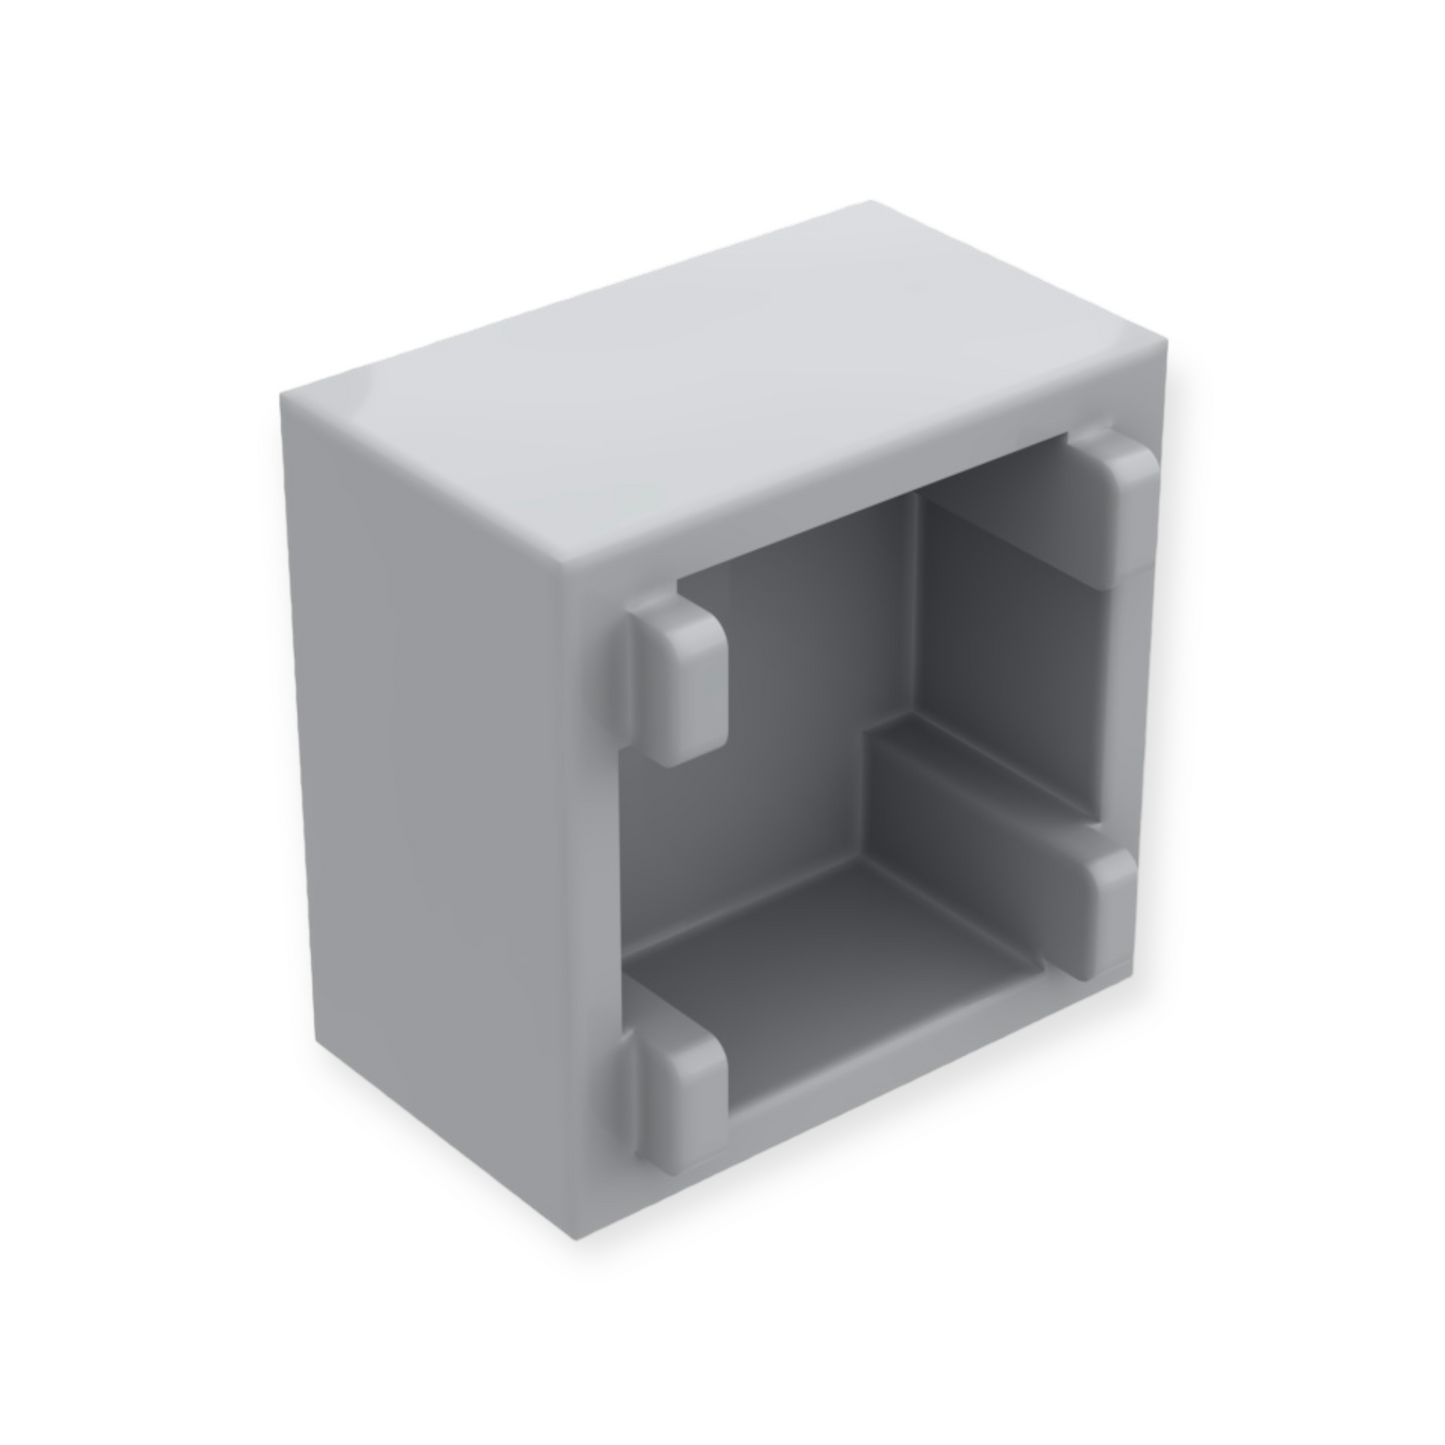 LEGO Container Box 2x2x1 in Light Bluish Gray